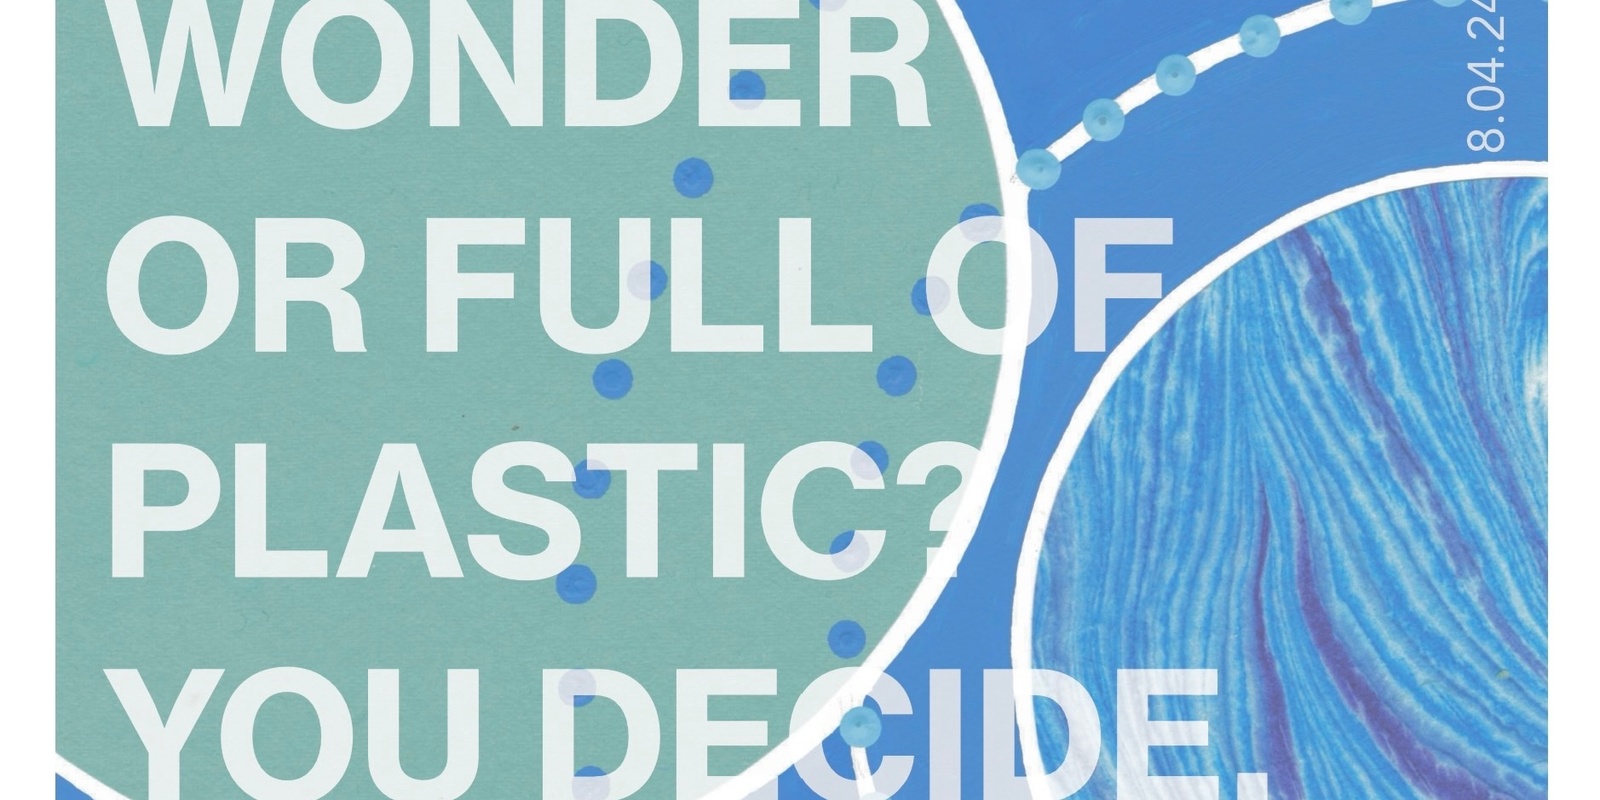 Banner image for Full of Wonder or Full of Plastic? You Decide. 